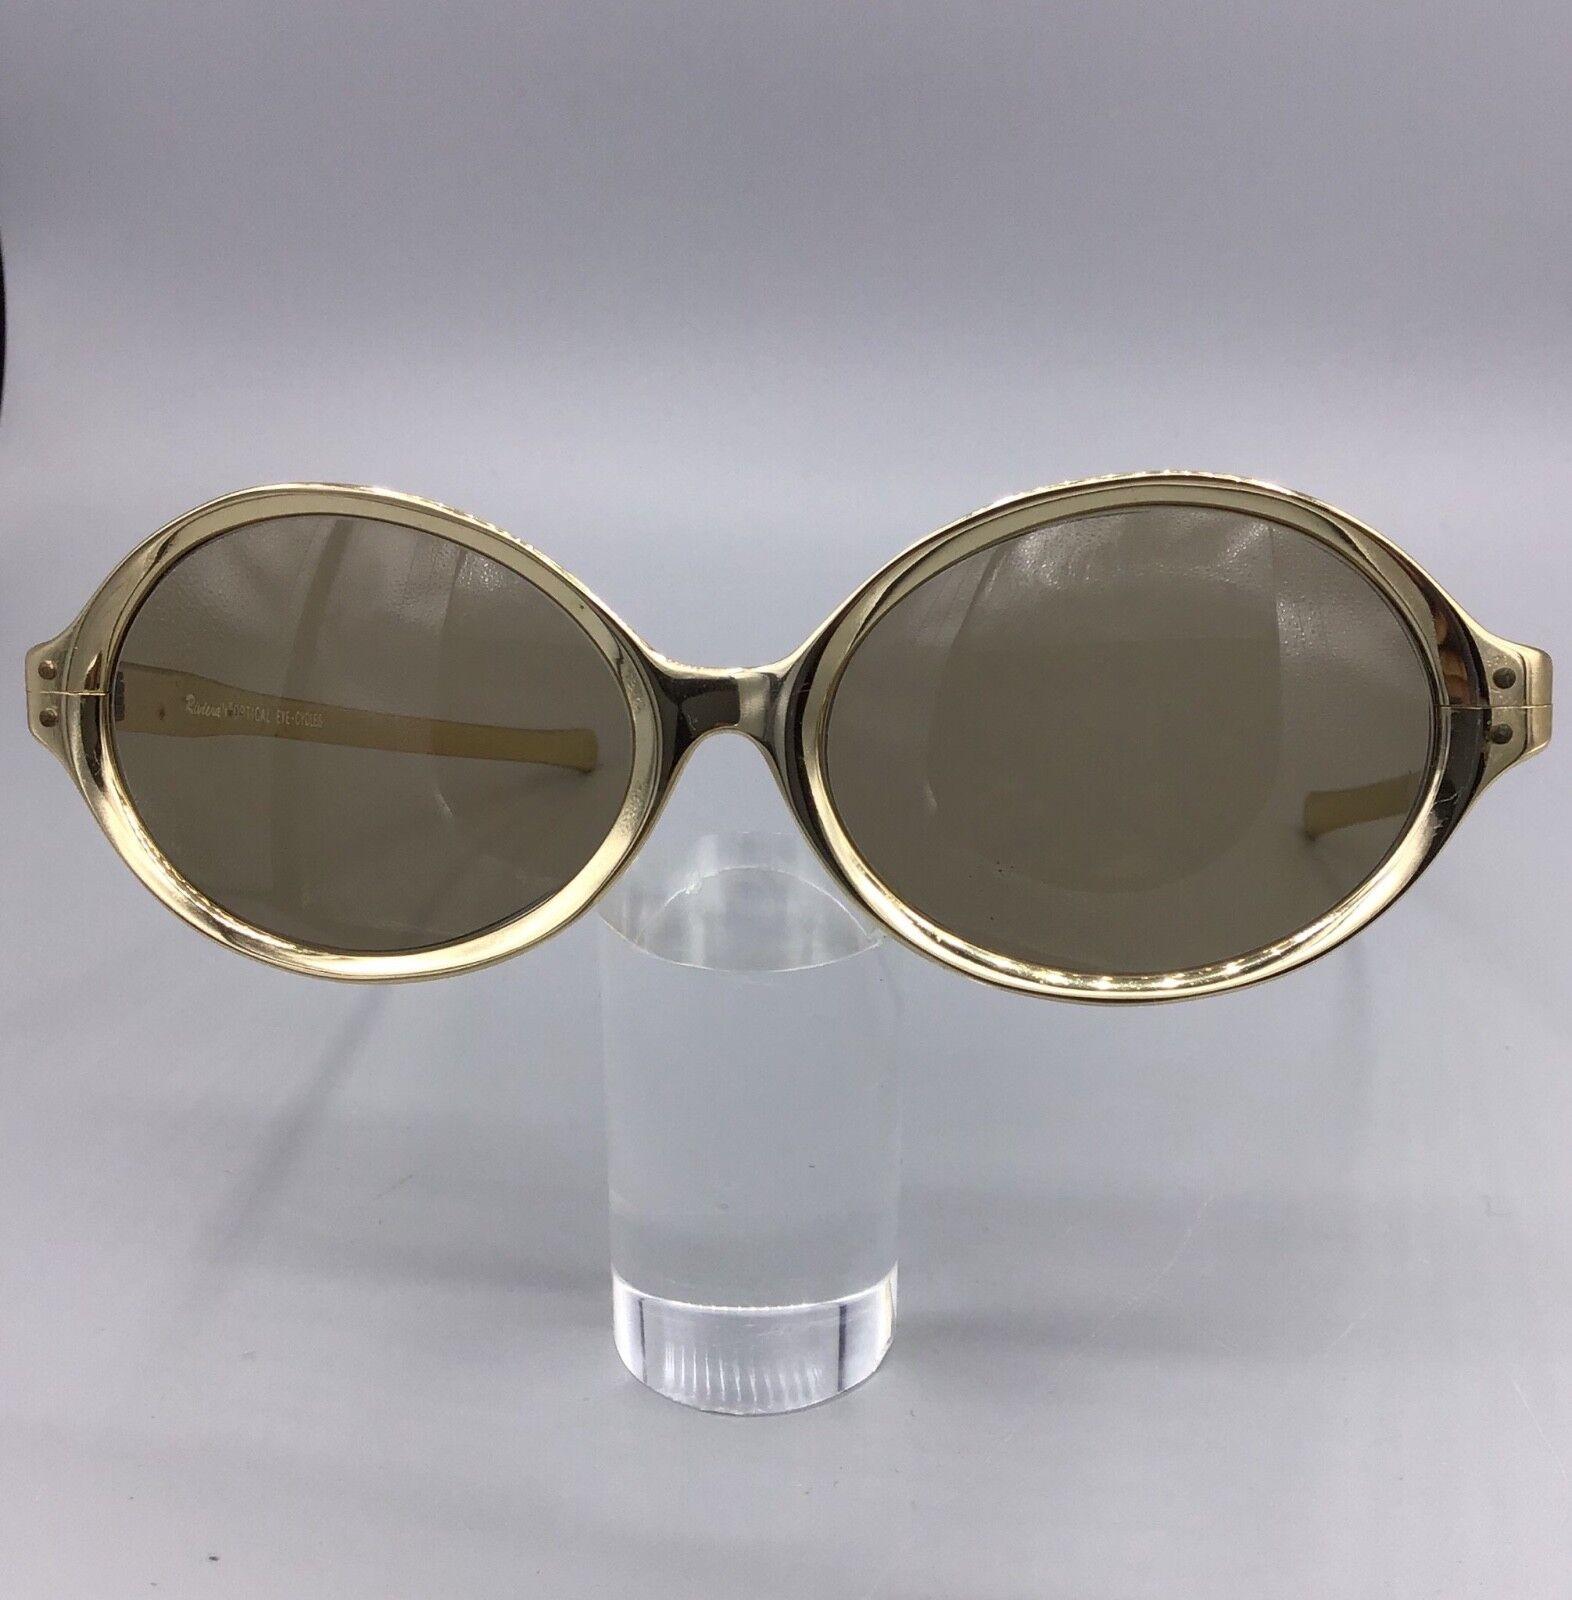 Riviera’s Optical Eye occhiale sole Sunglasses alluminium gold 60s made in USA